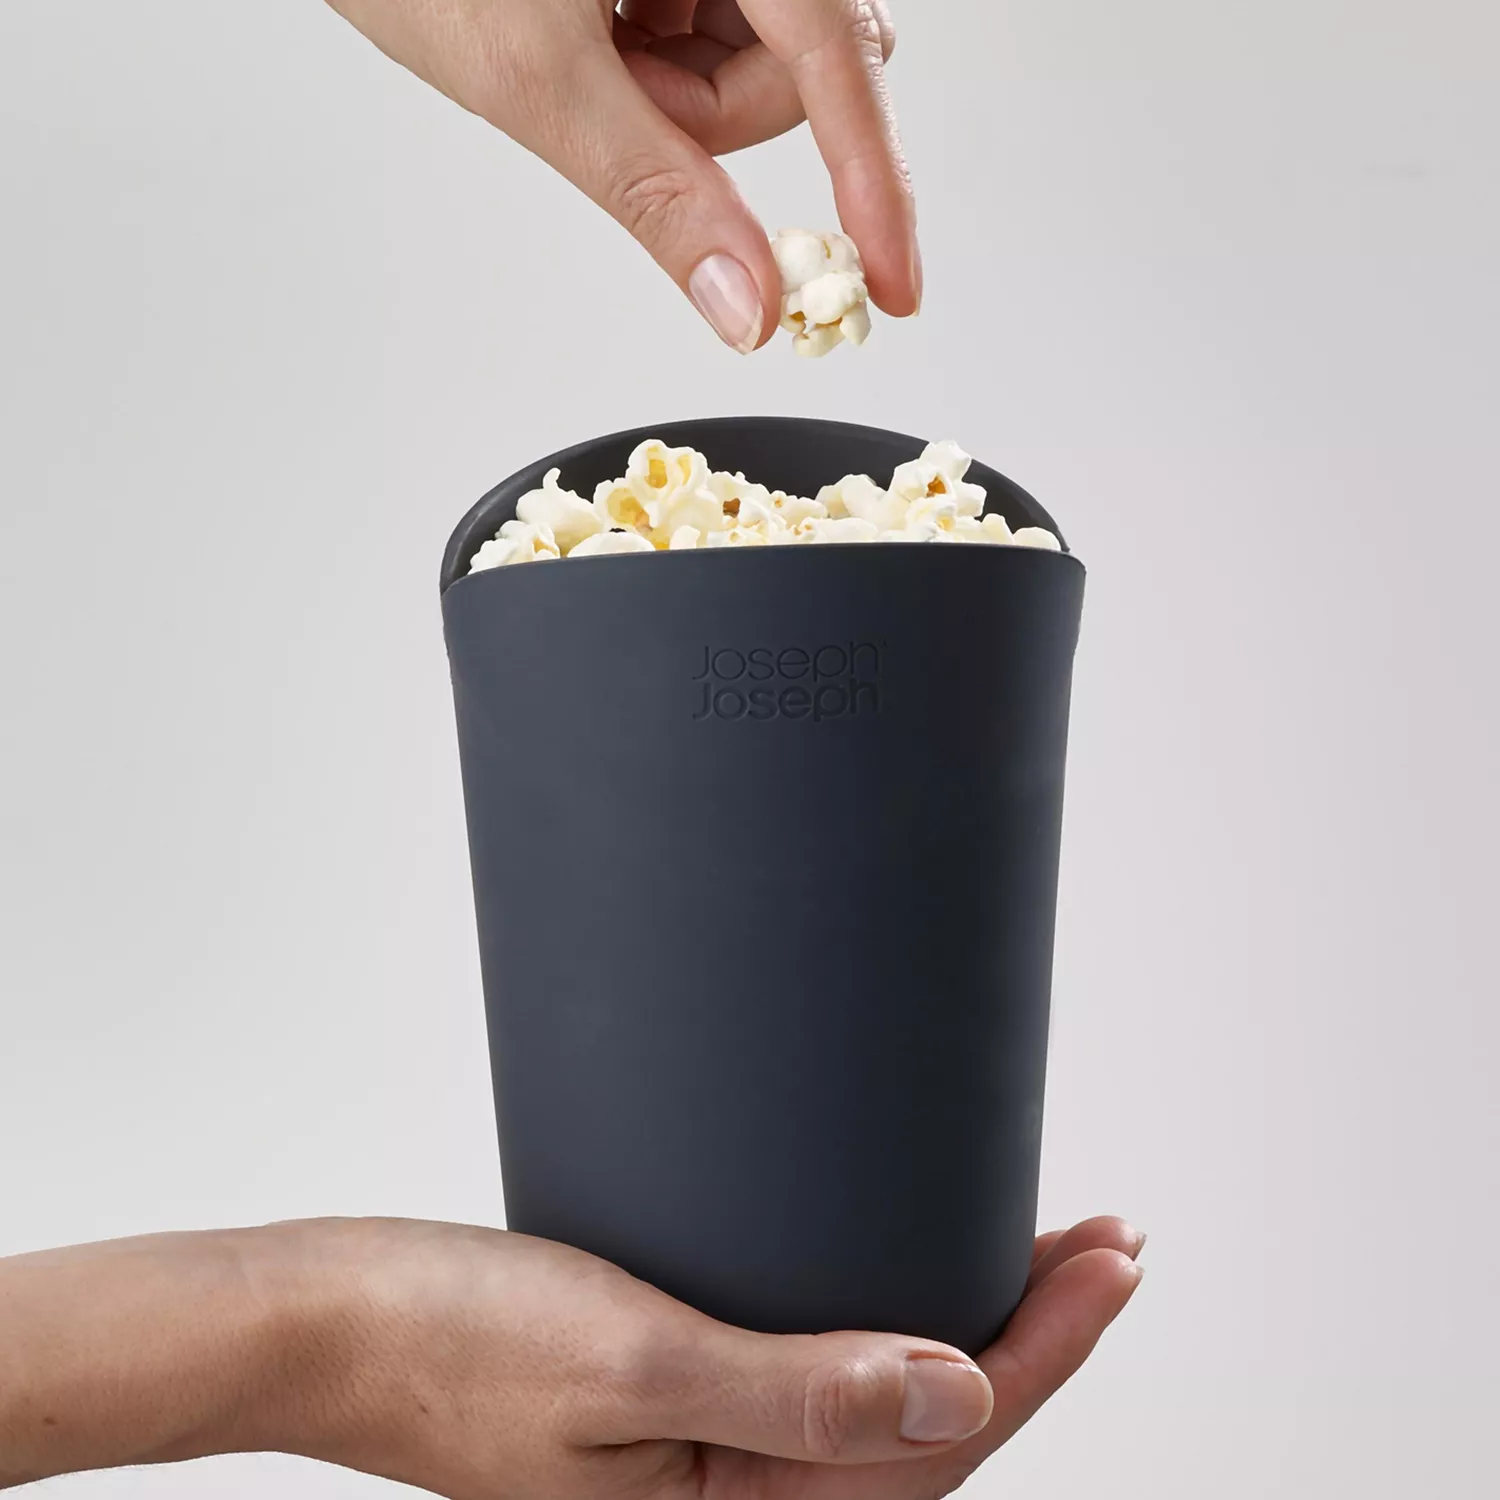 Review: Joseph Joseph M-Cuisine Popcorn Maker PLUS giveaway. – Maflingo